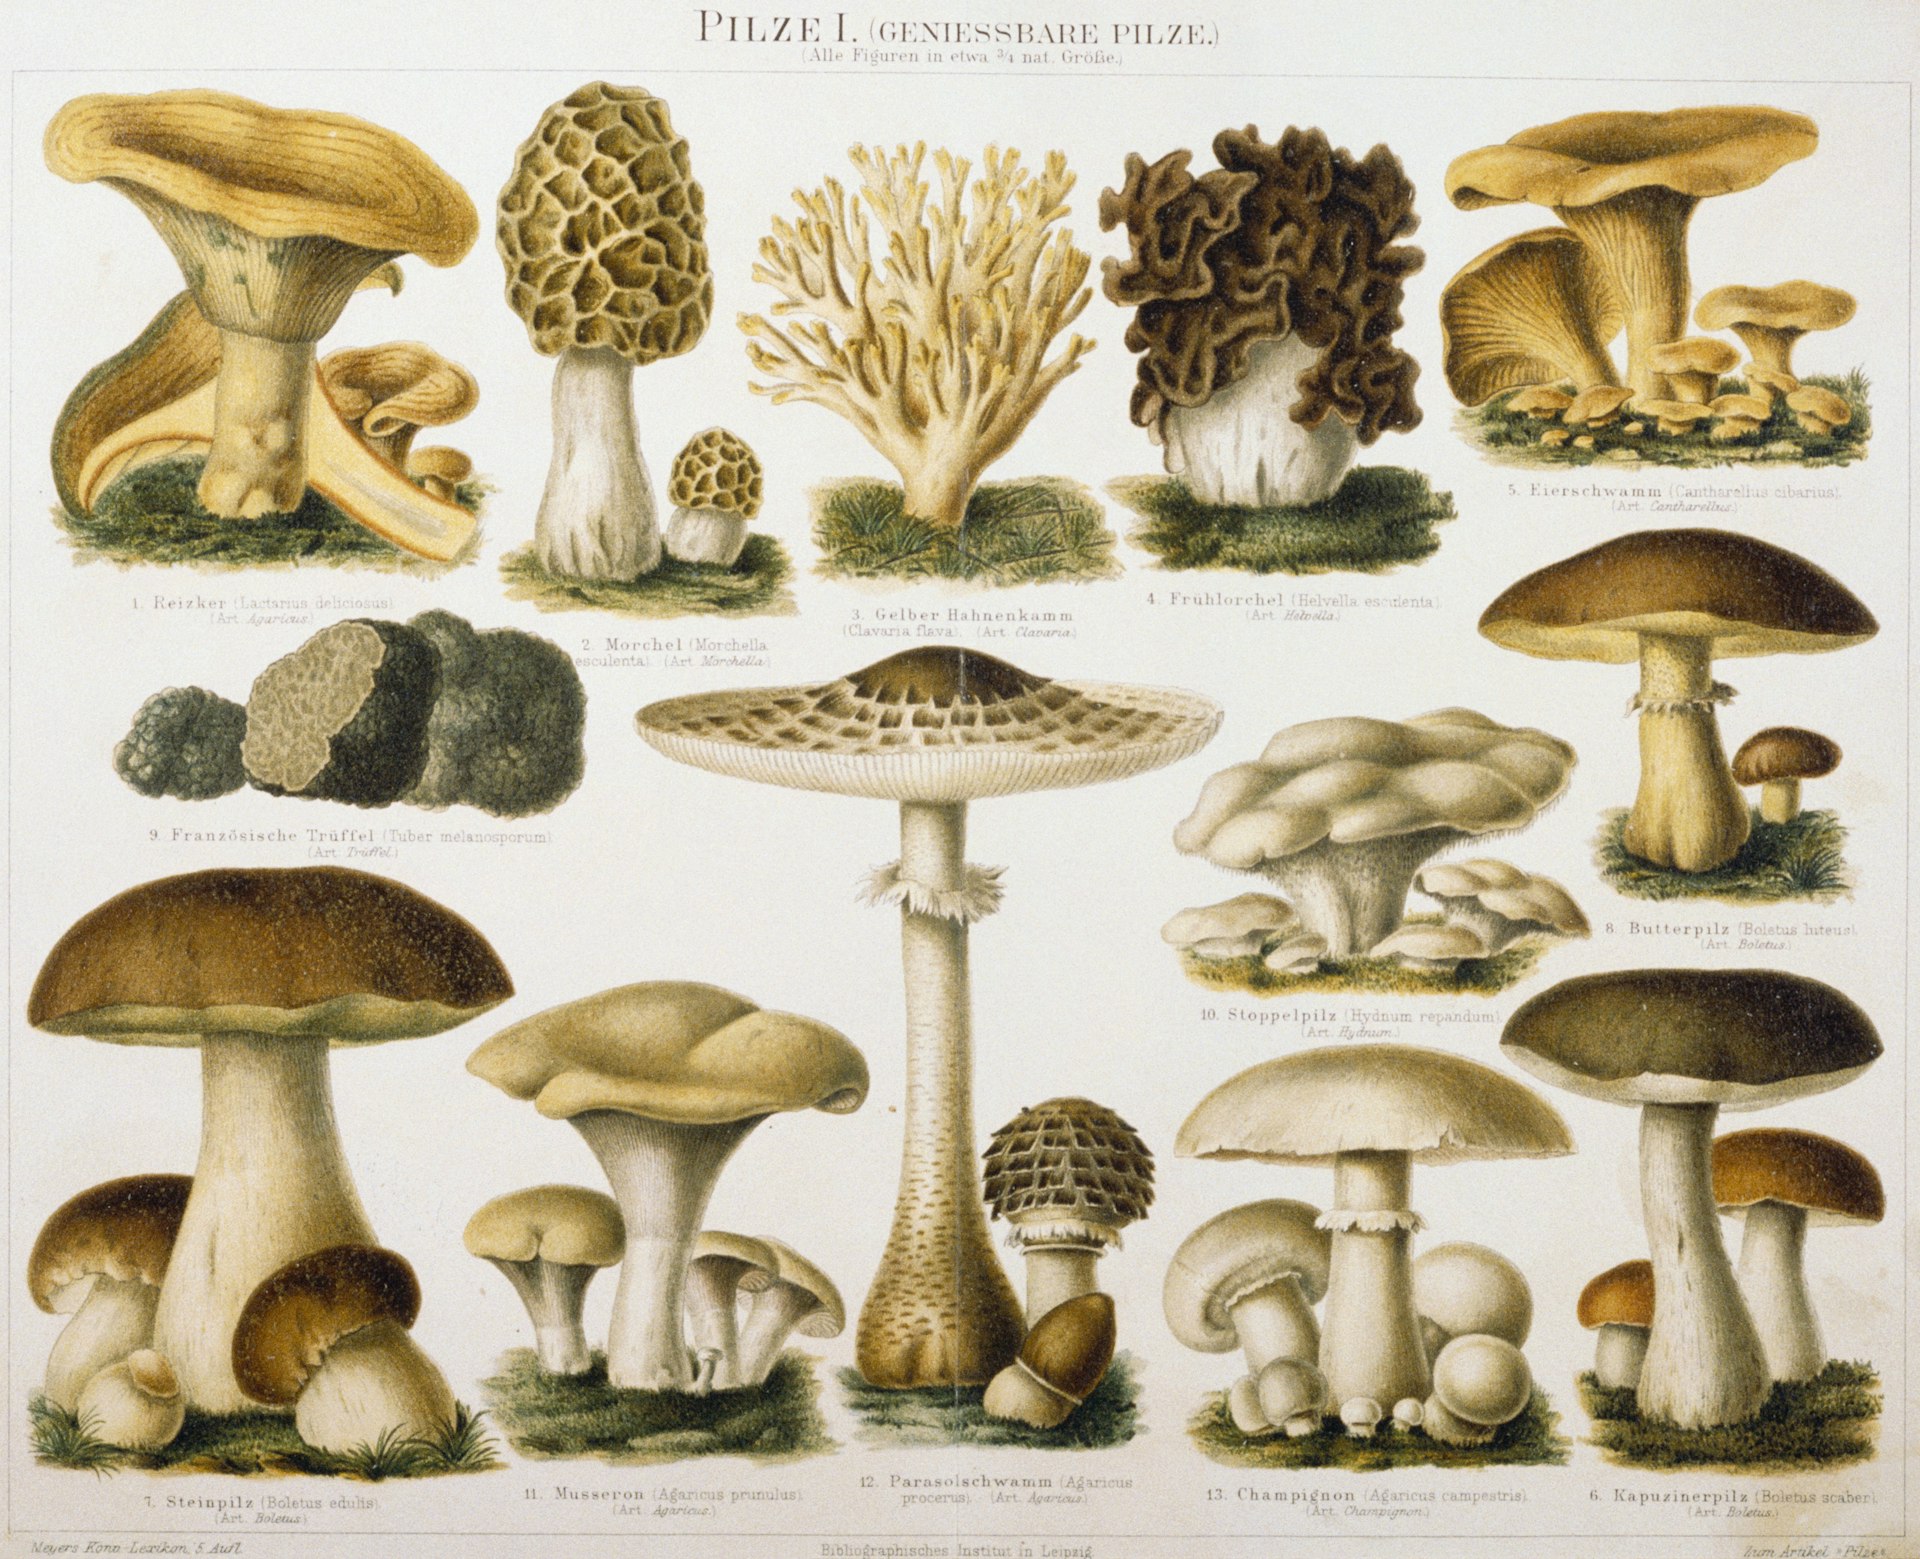 German Illustration of Edible Fungi